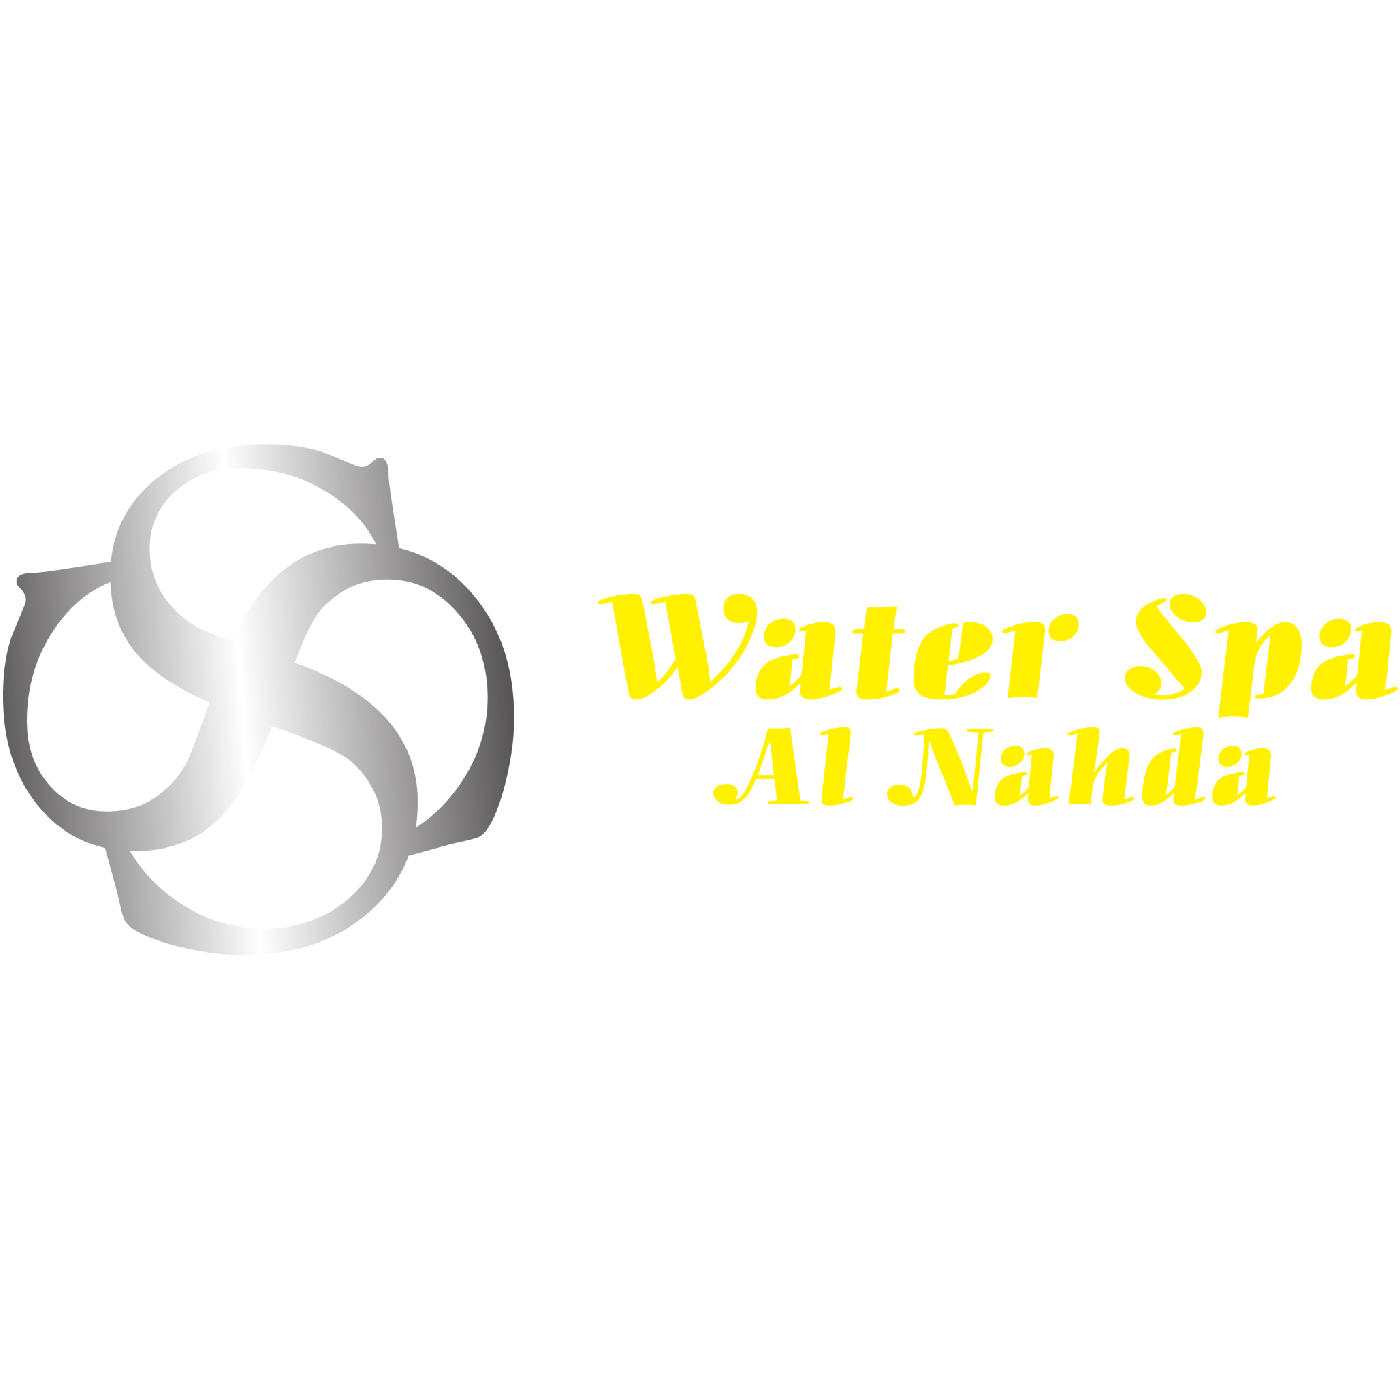 Water Spa Nahda